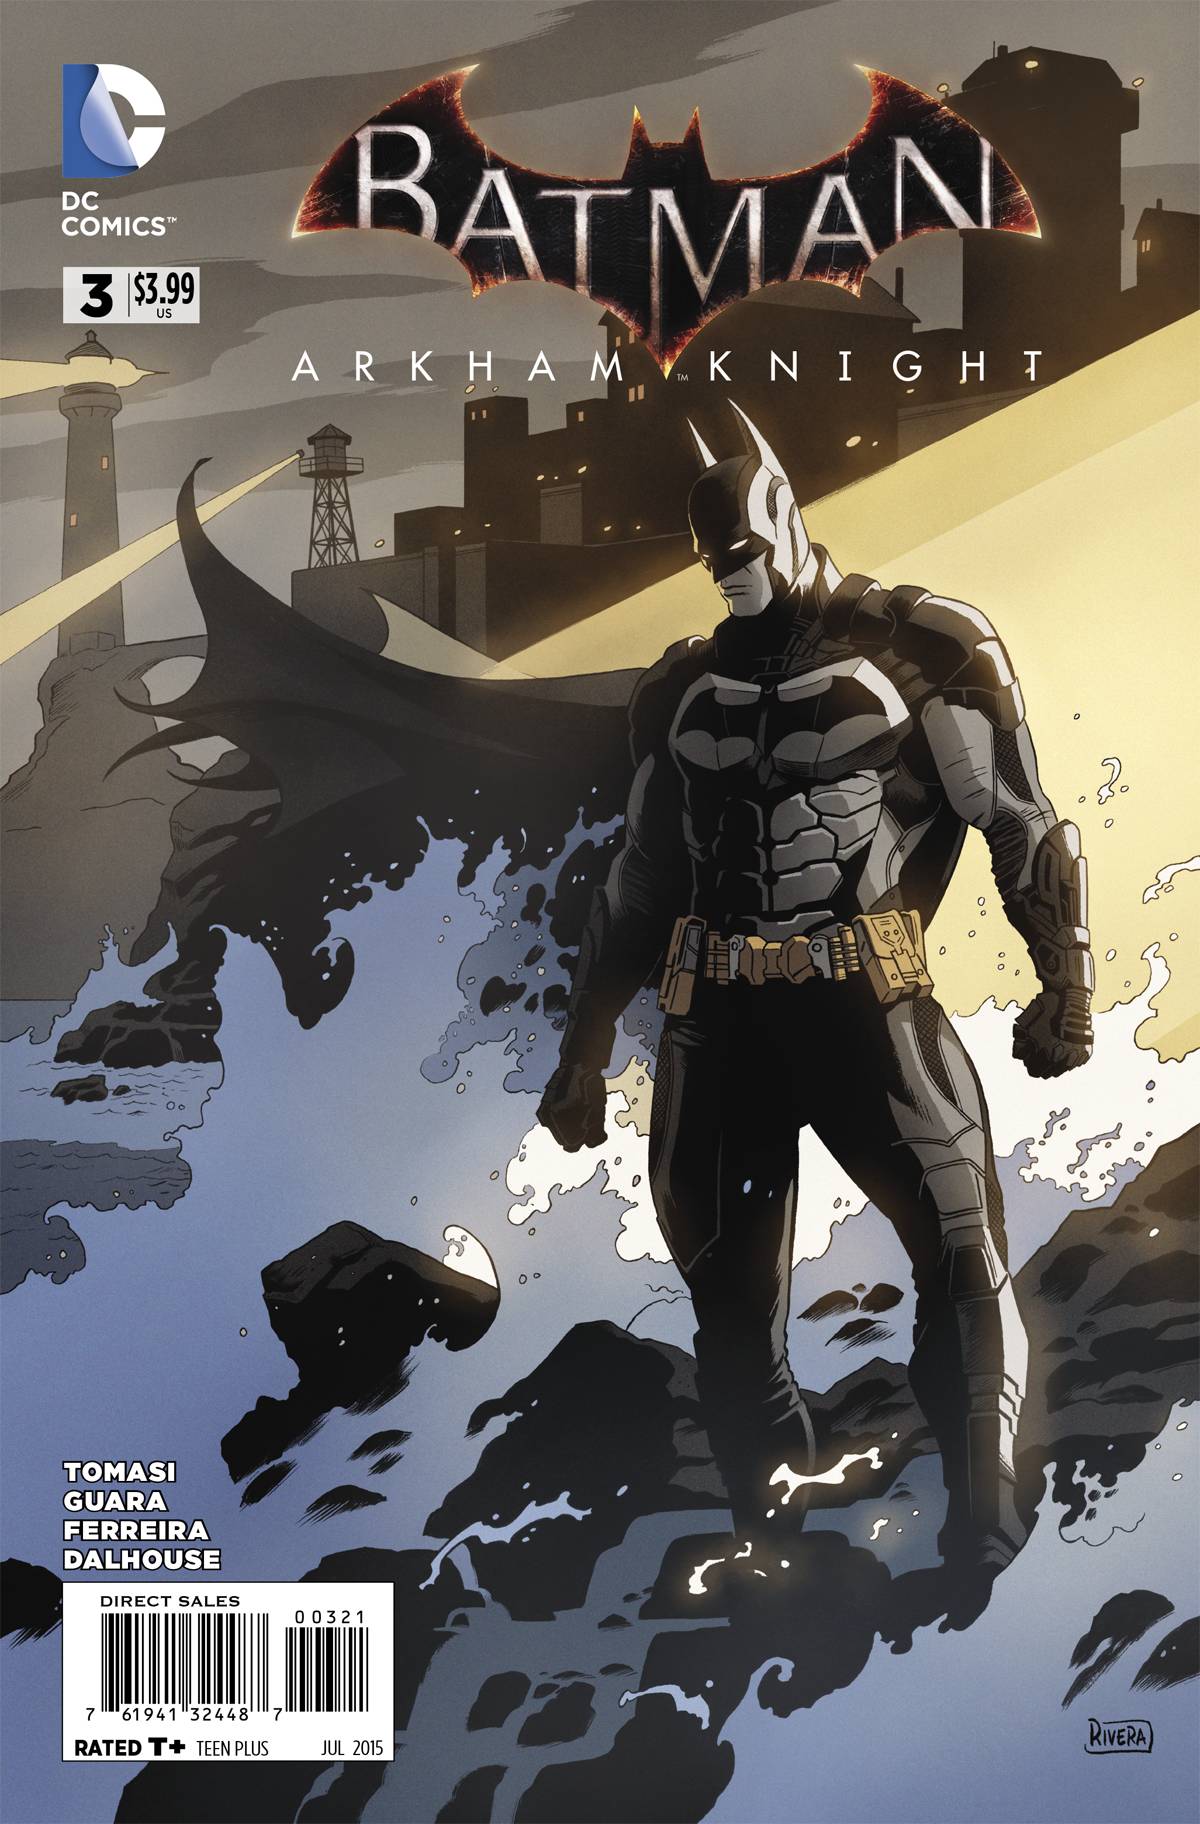 ArtStation - Batman: Arkham Knight (Limited Edition Comic Cover)